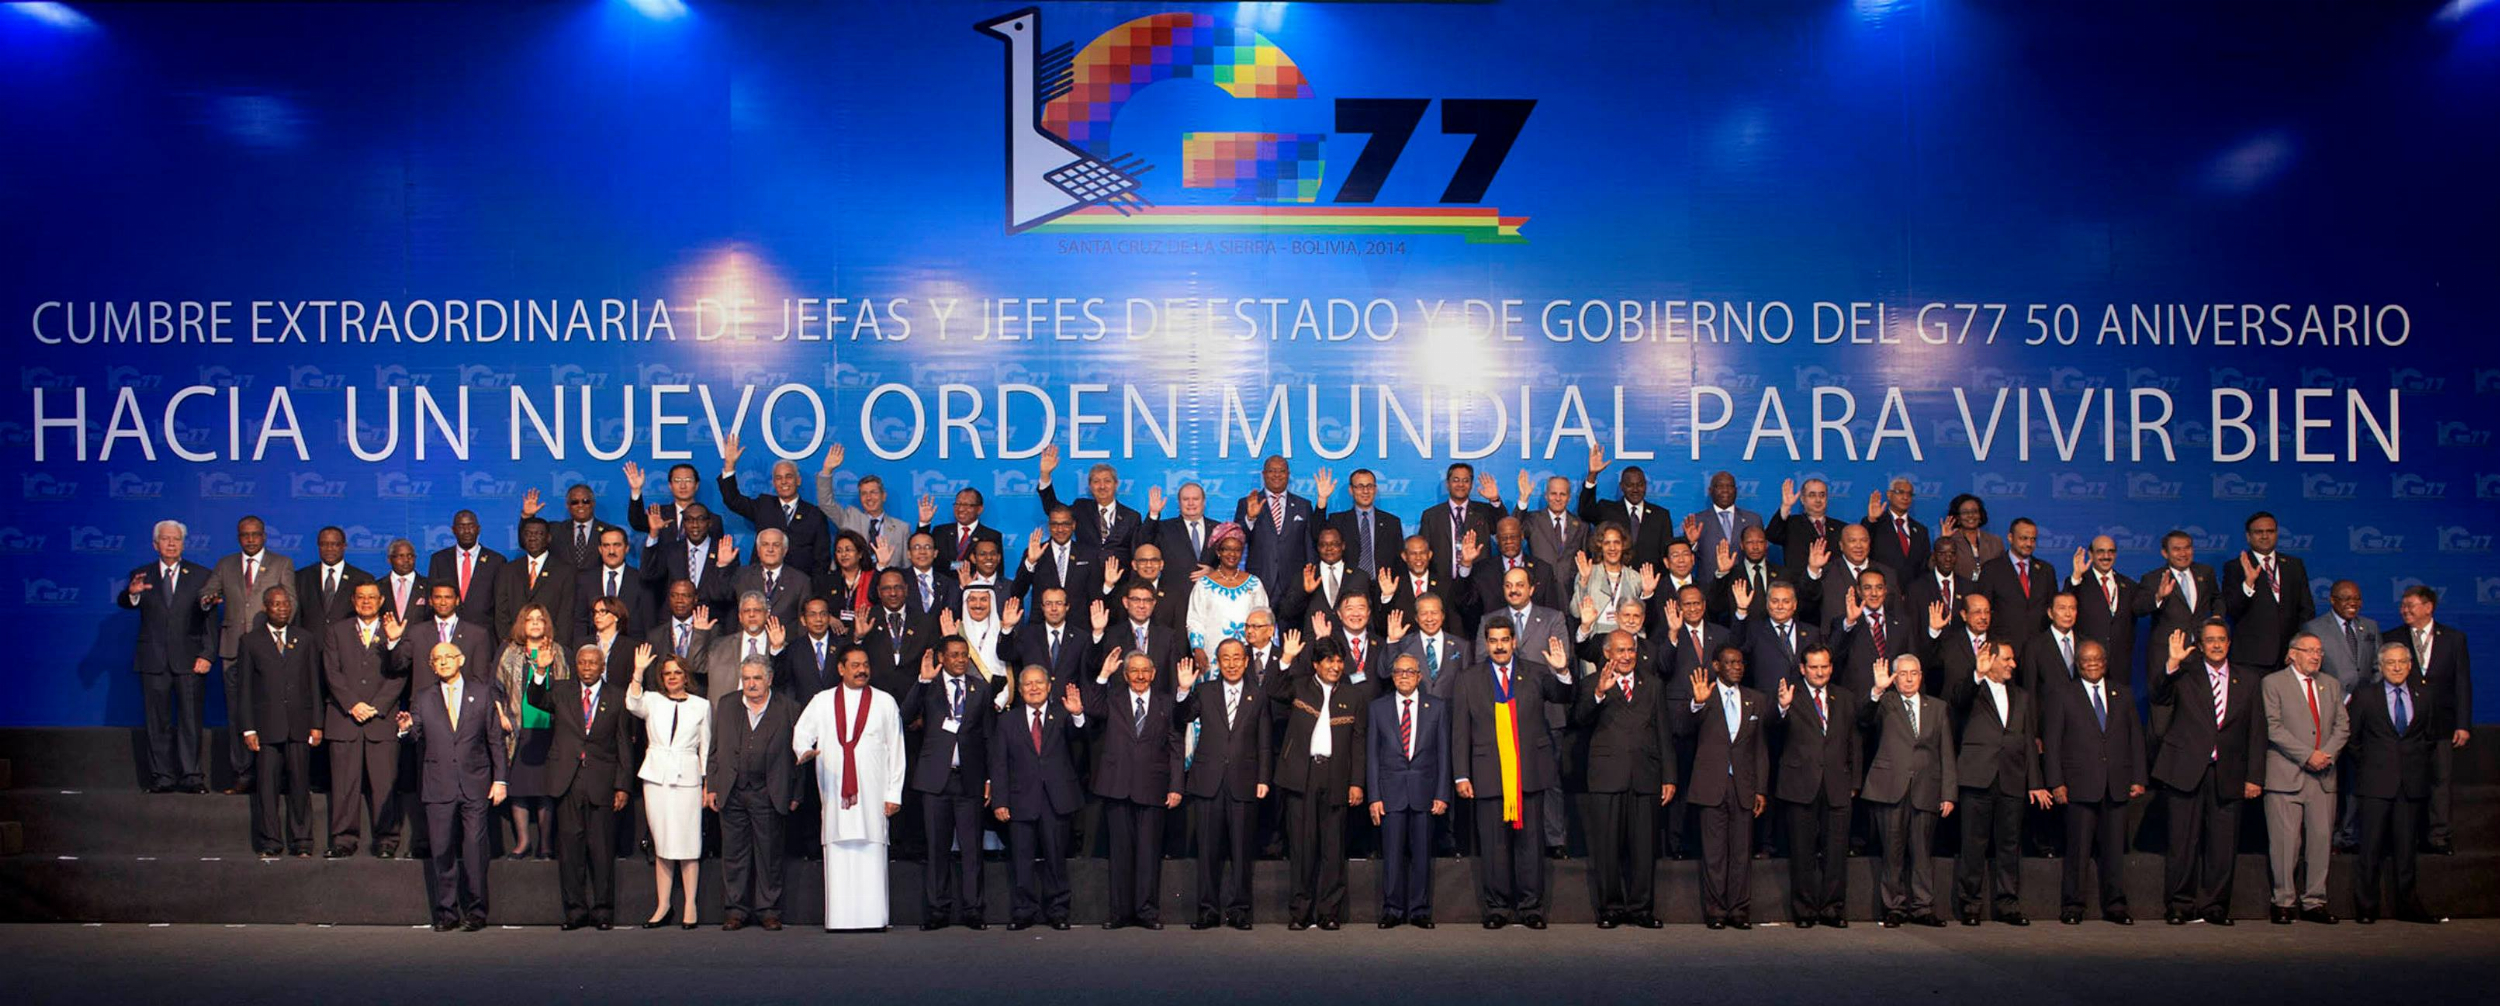 g77-nuevo-orden-mundial-new-world-order.jpg